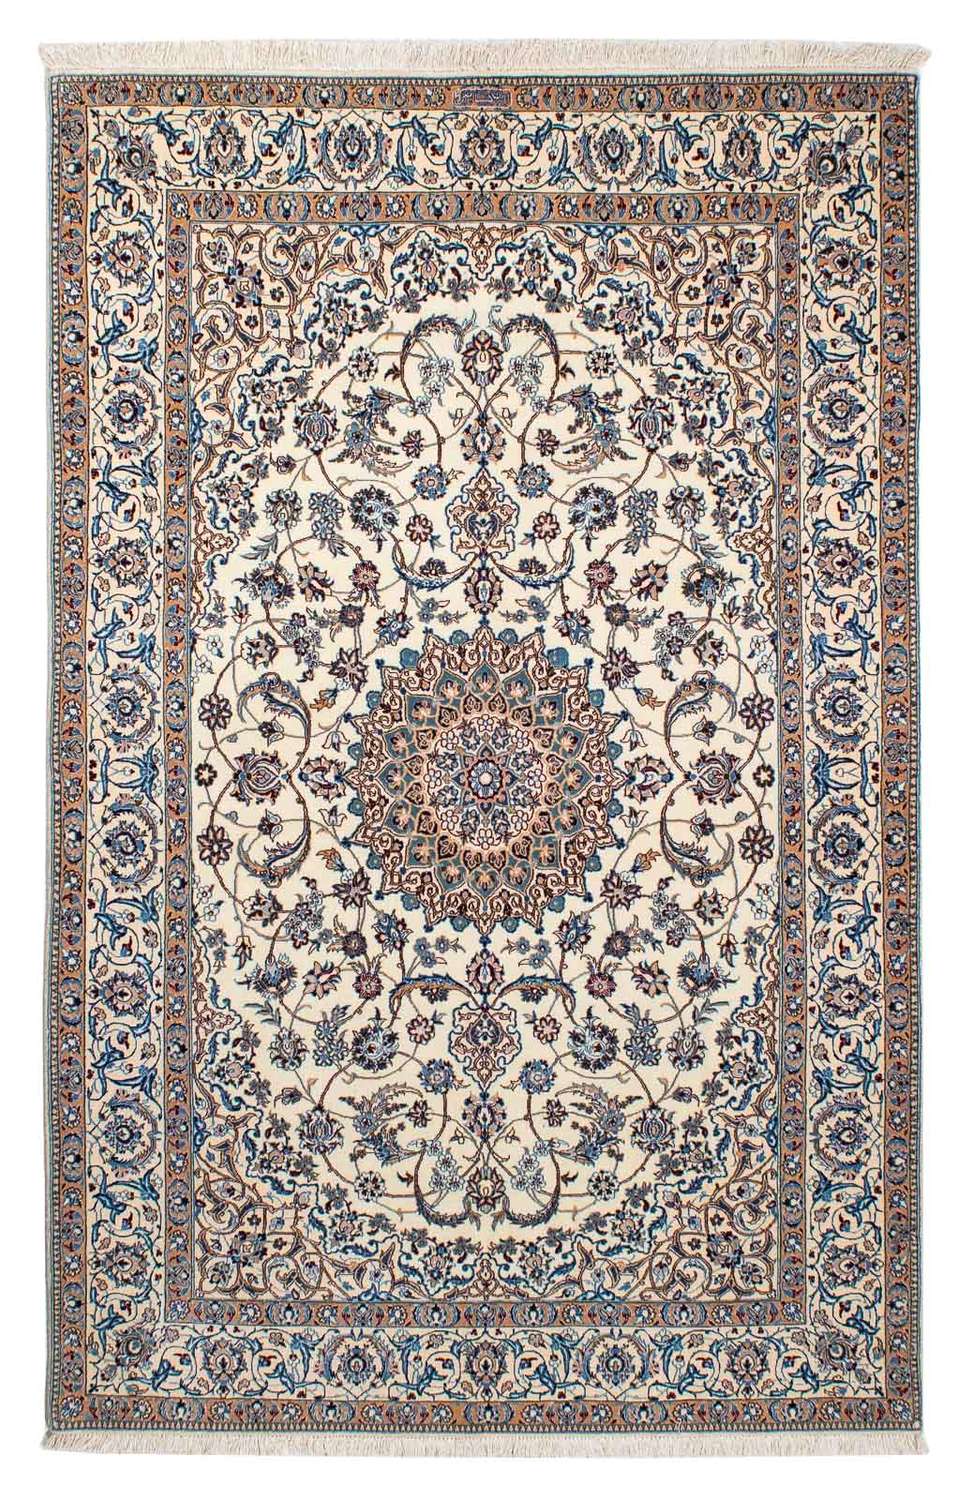 Persisk tæppe - Nain - Premium - 194 x 128 cm - beige